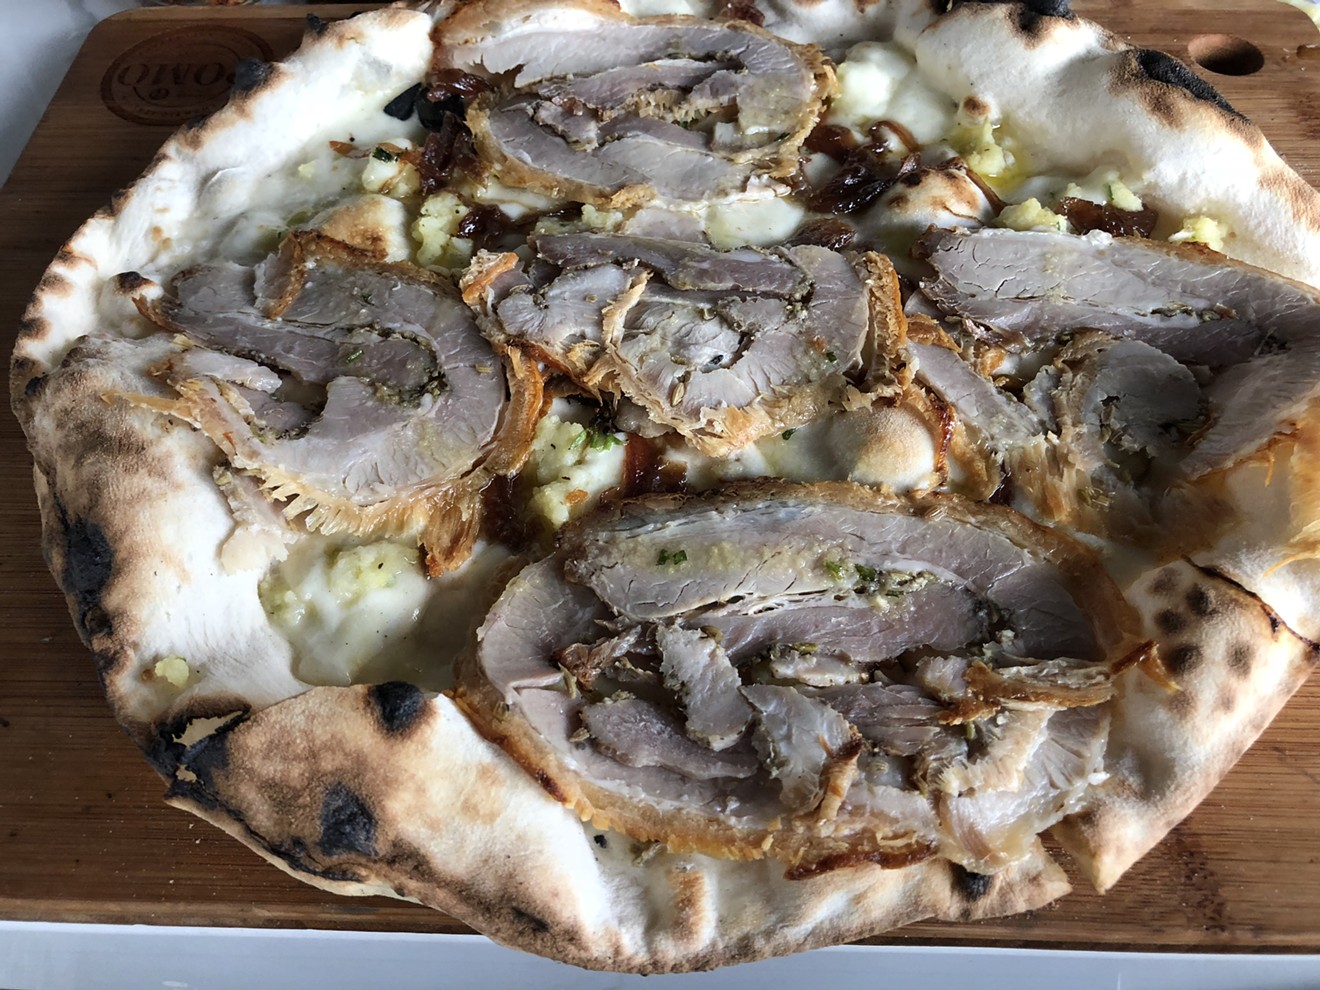 "Rimini-style" pizza, new to Pomo.